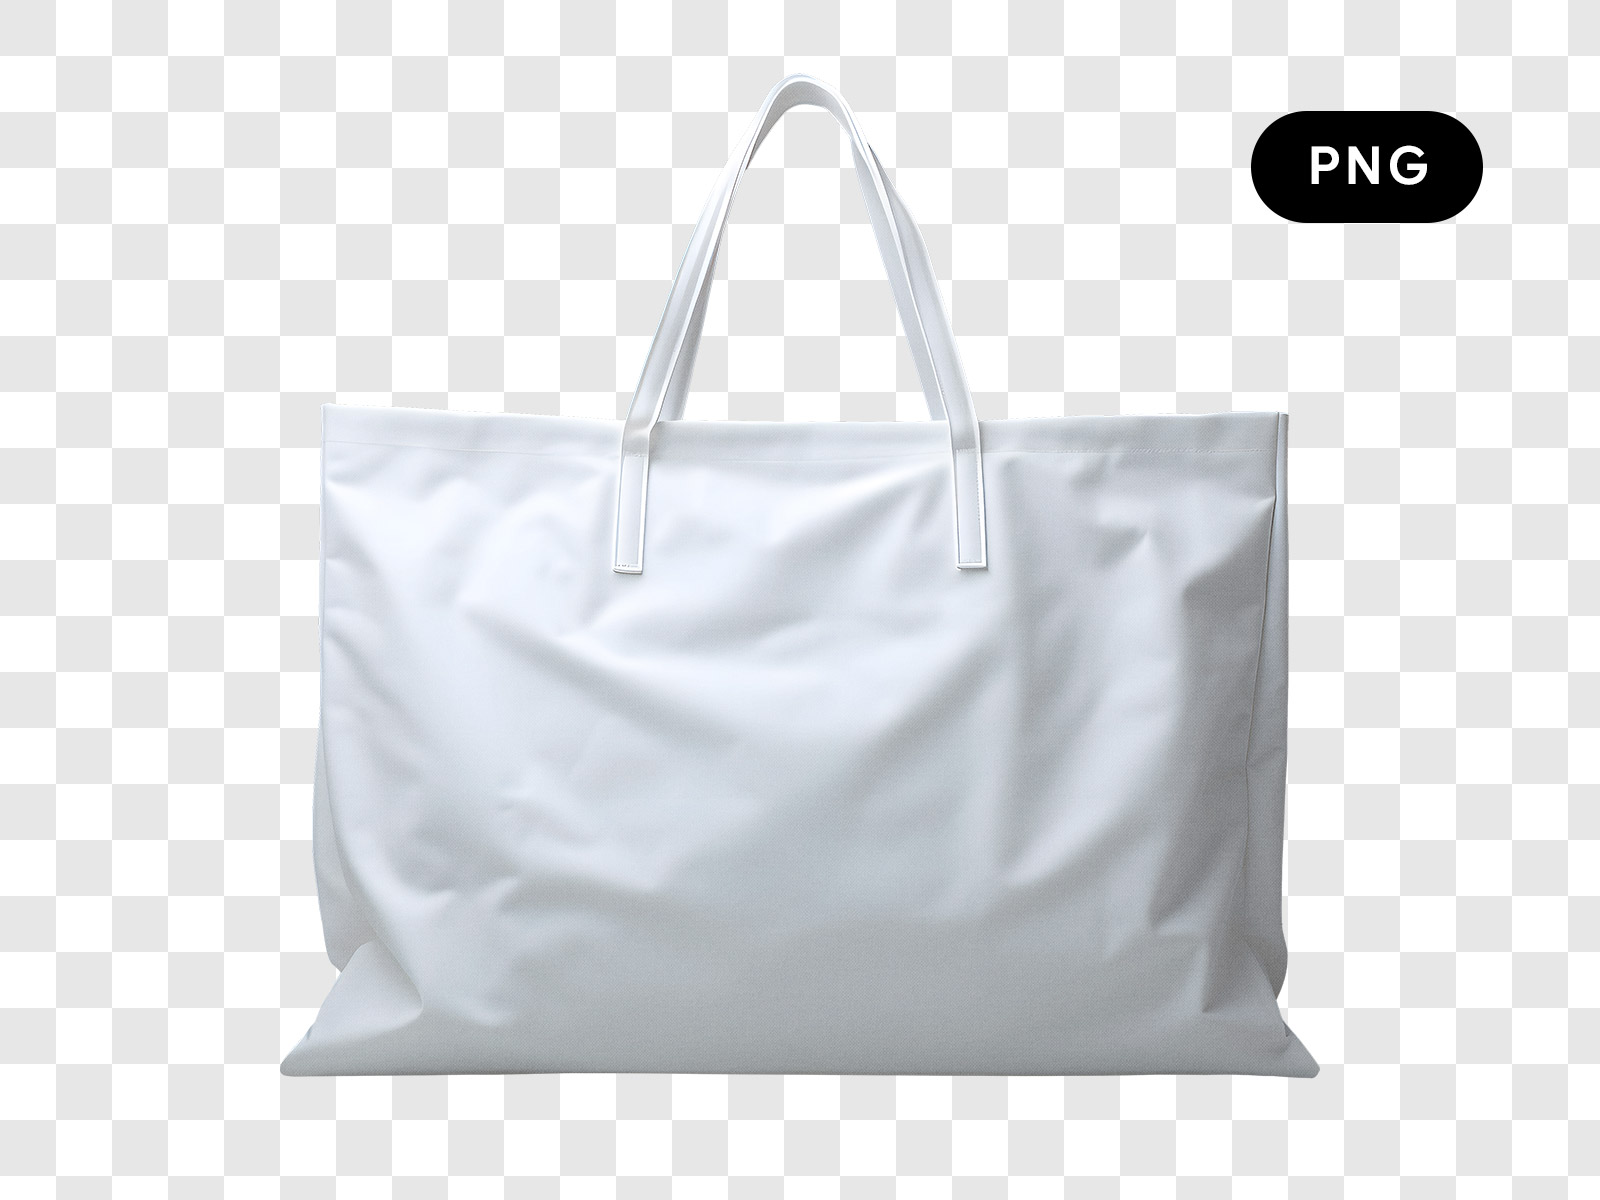 Cotton Bag PNG Transparent Images Free Download | Vector Files | Pngtree